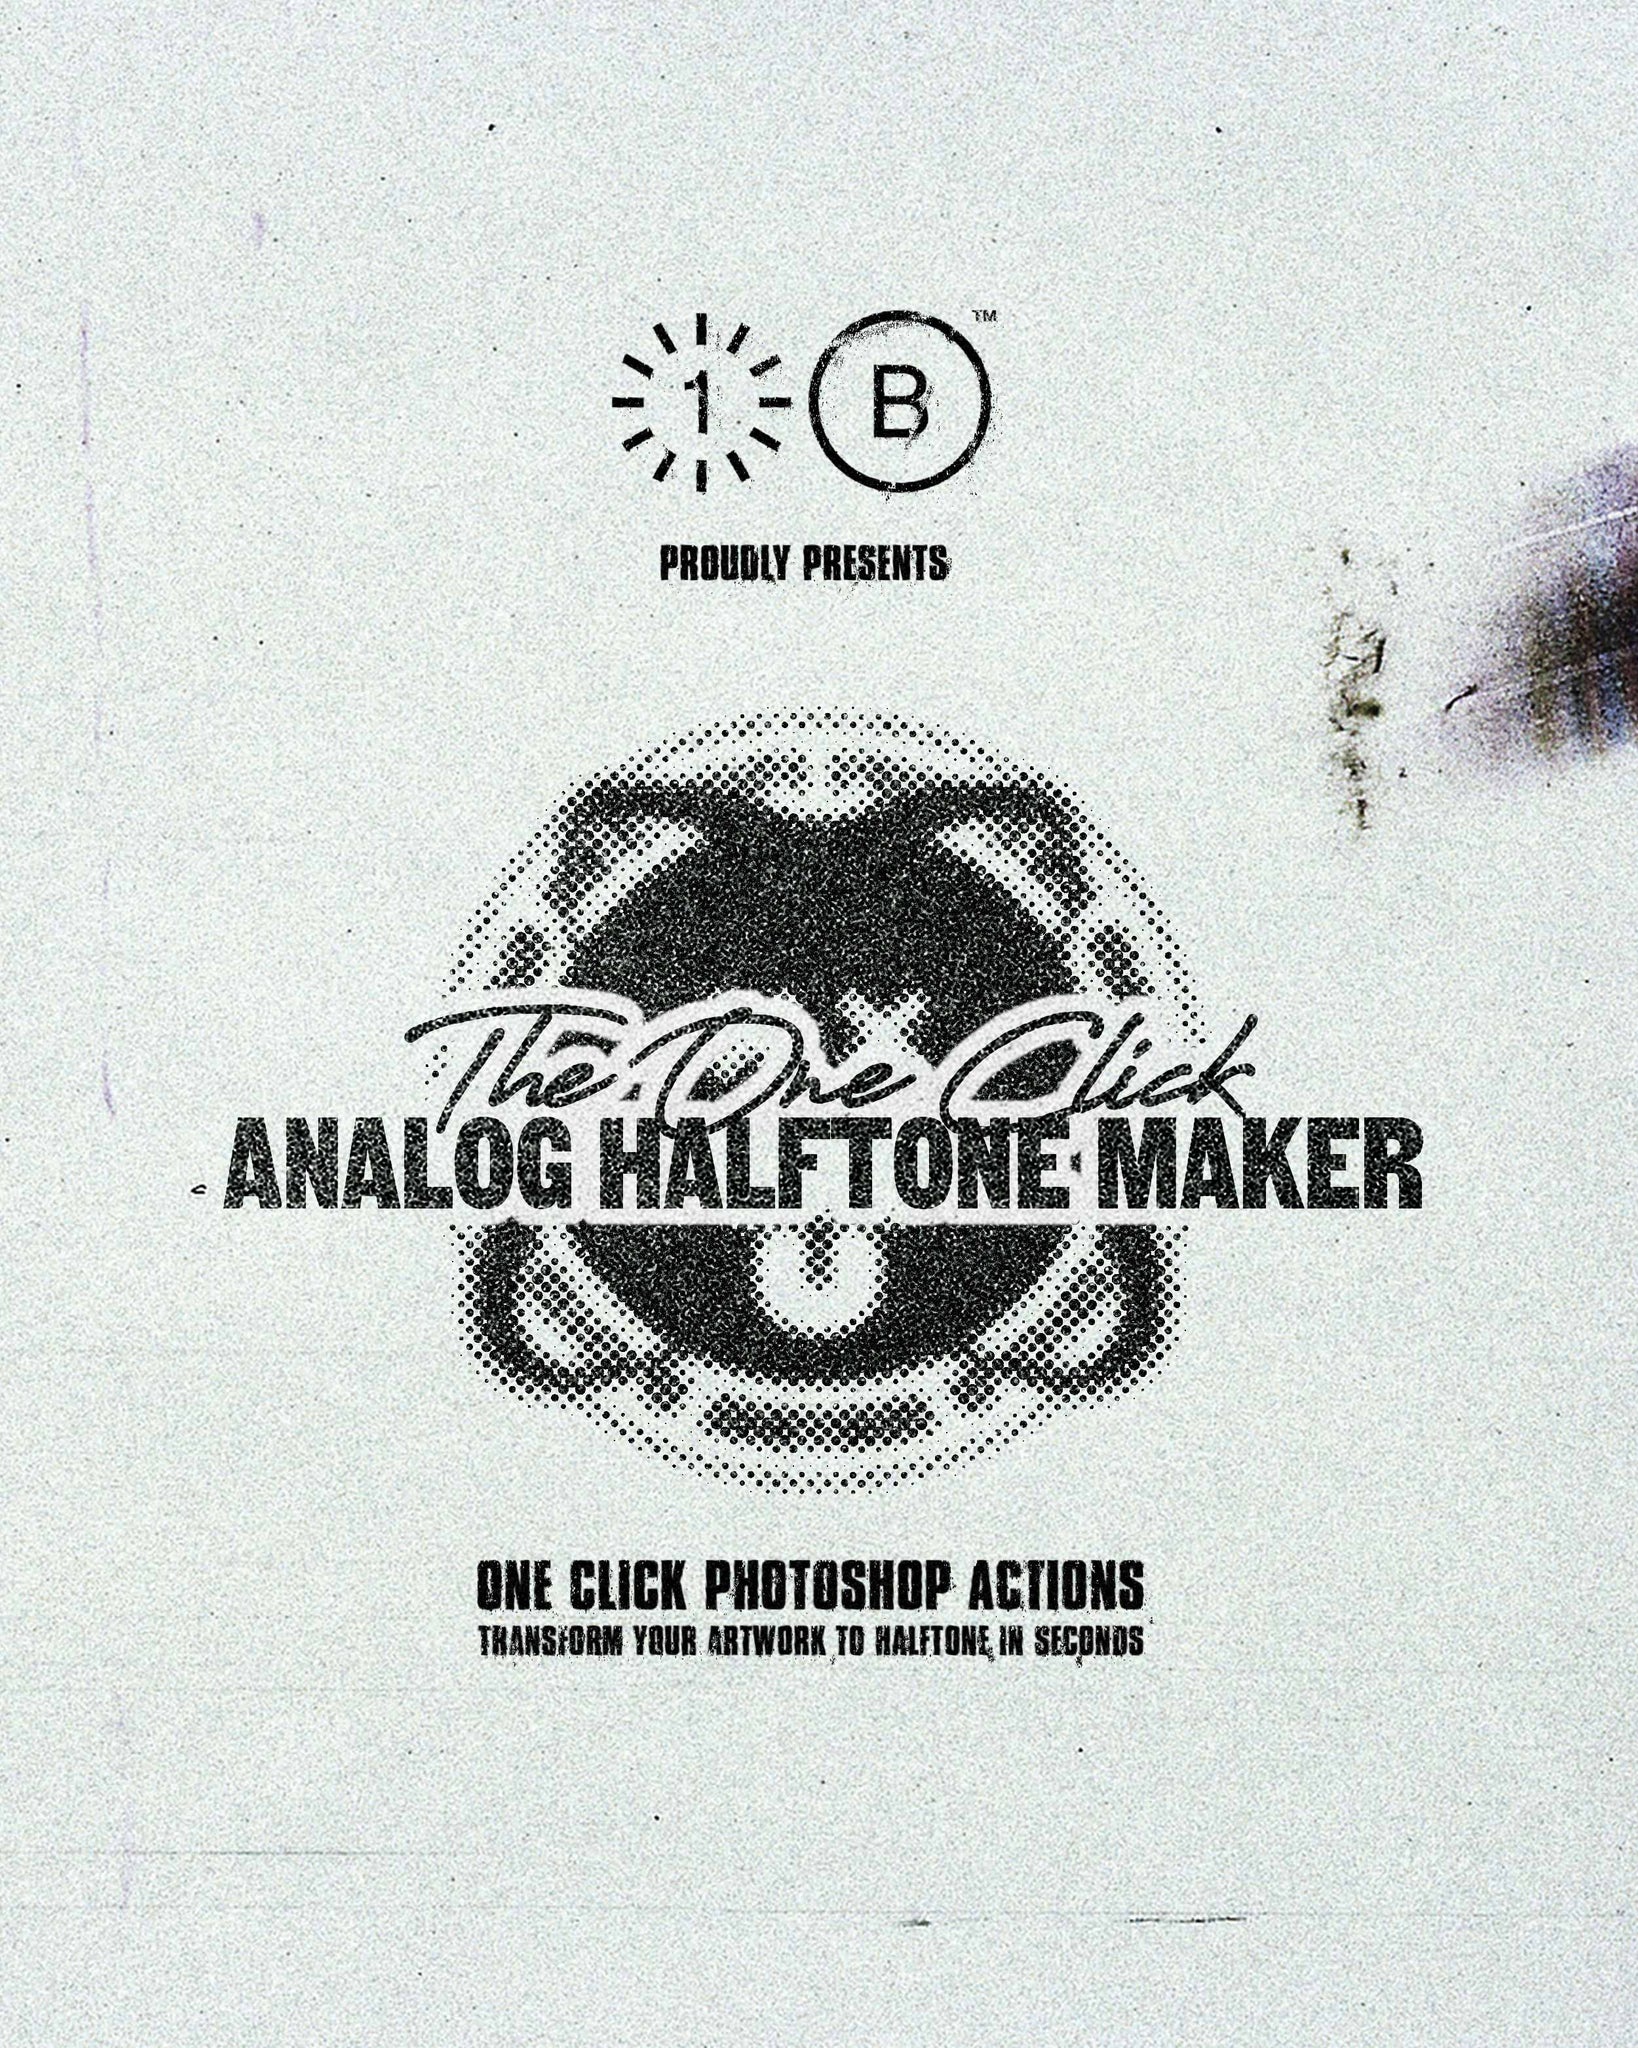 The Analog Halftone Maker